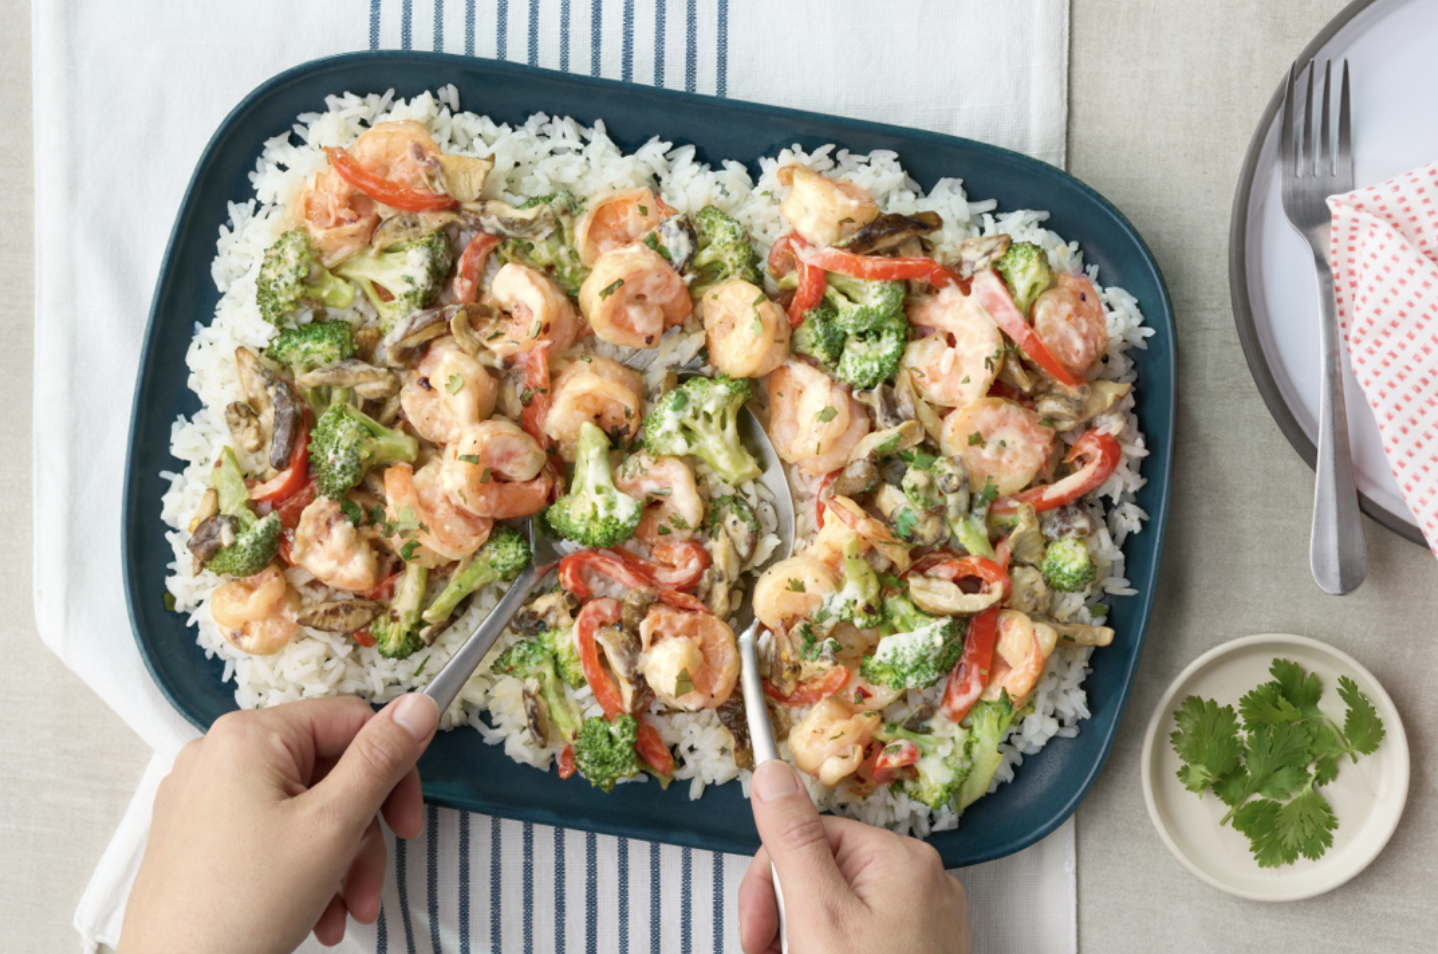 Hands cut into a shrimp, broccoli, and rice dish